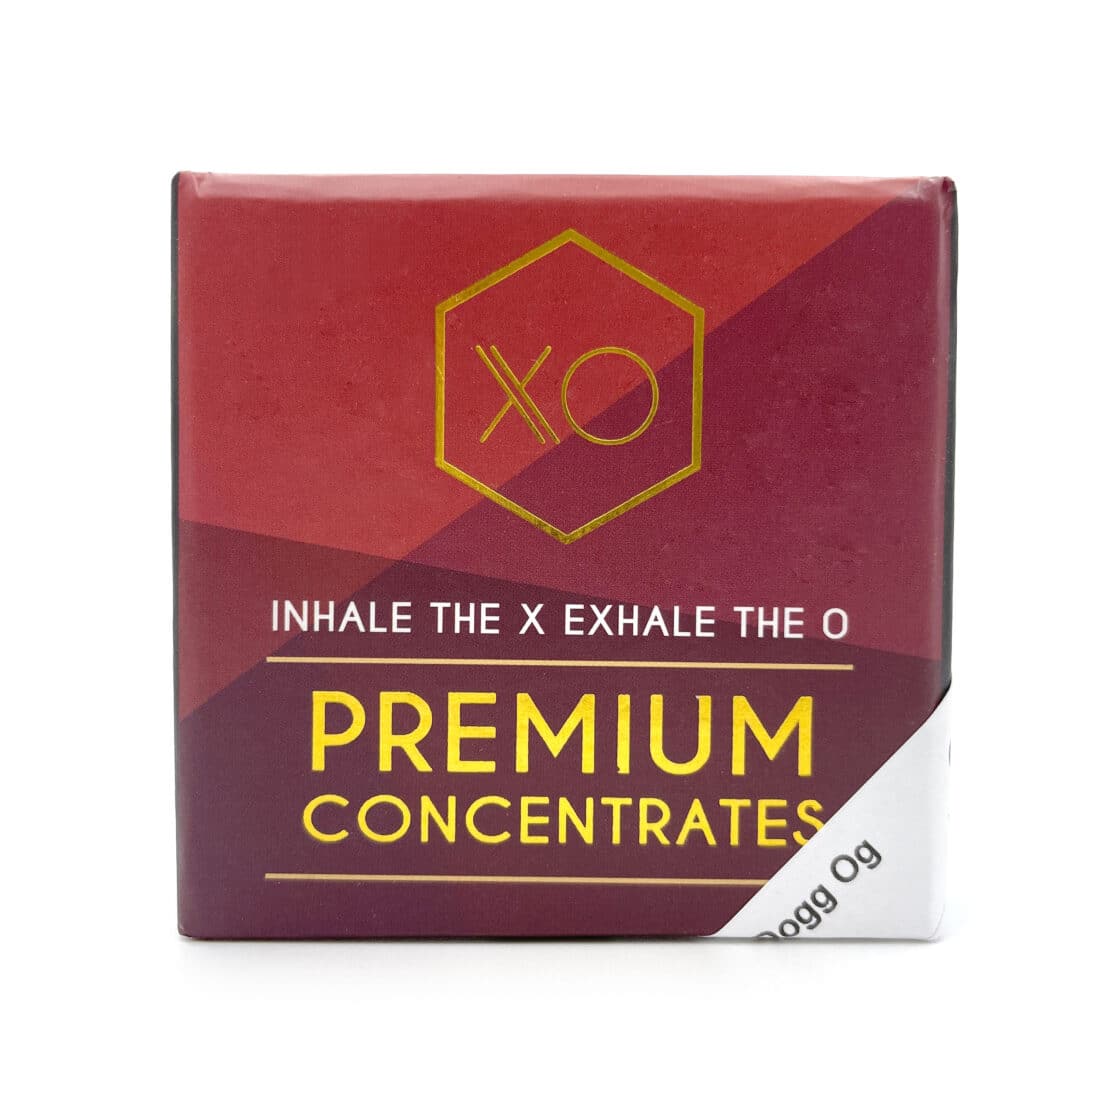 XO Premium Concentrates Shatter (2g) Snoop Dogg OG